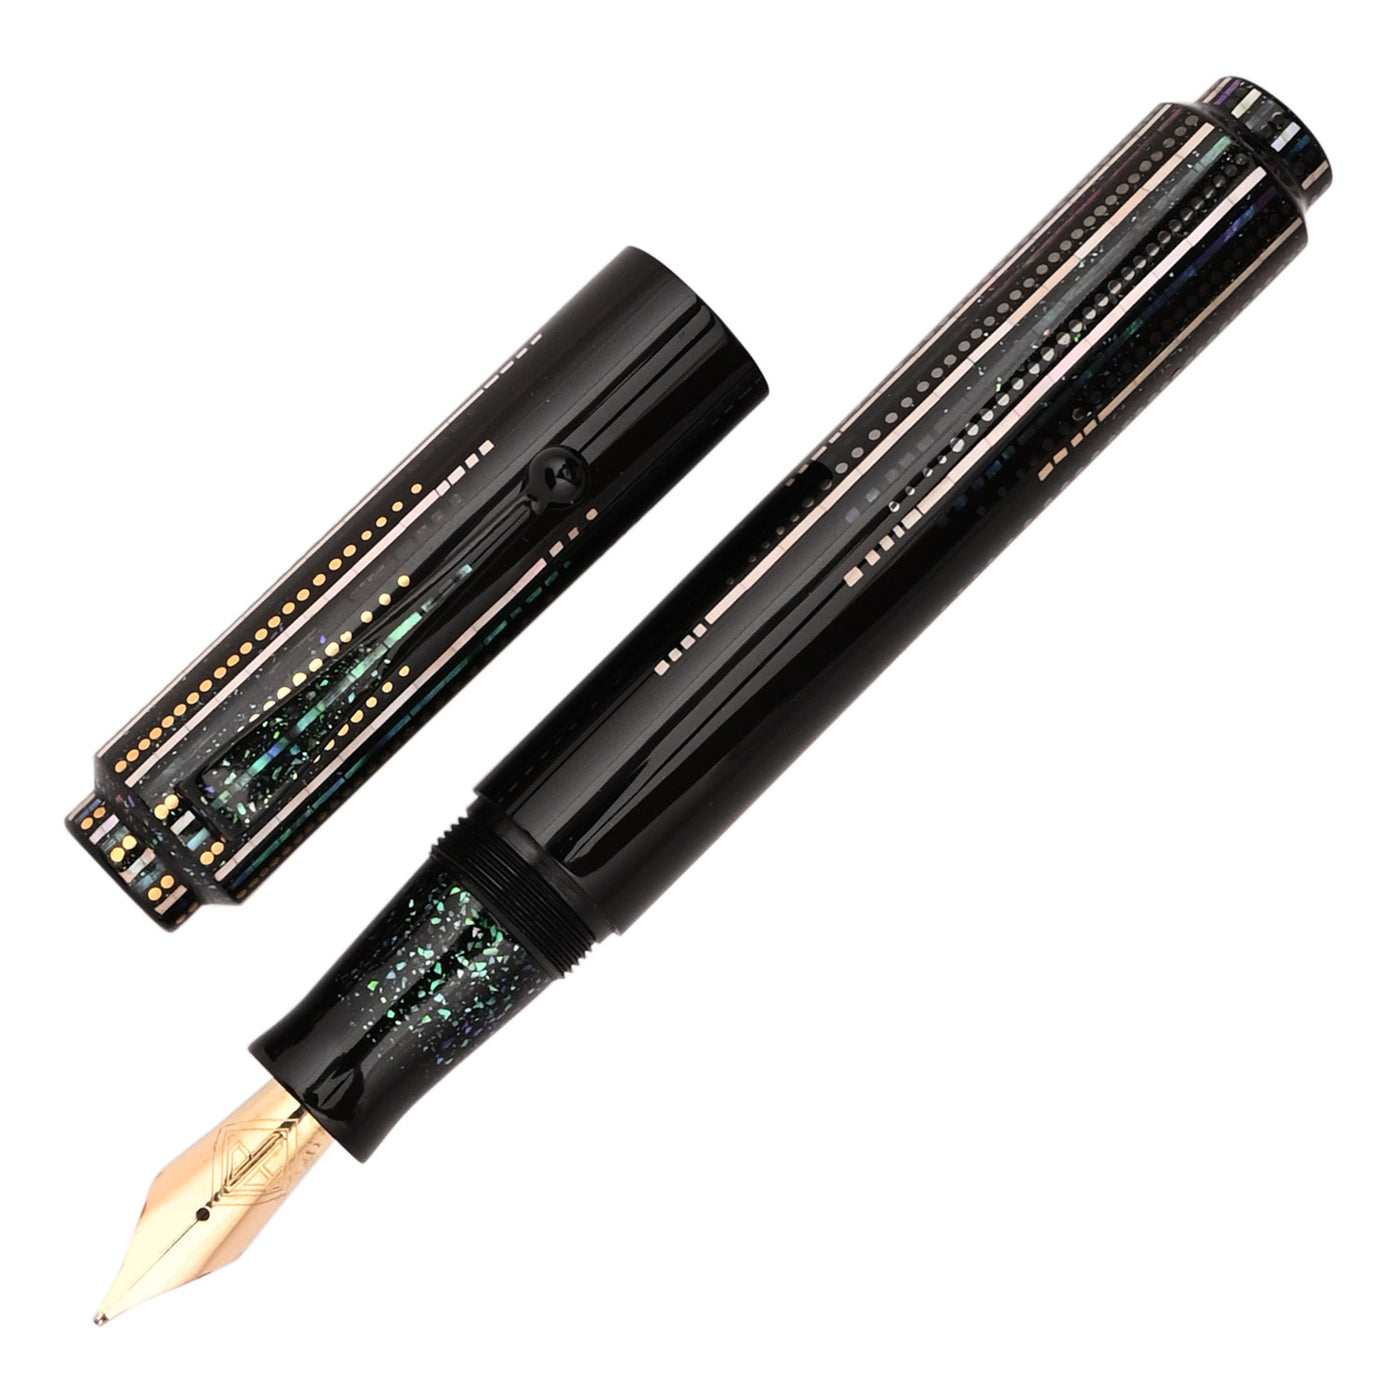 Fine Nib Black Drawing Pen, Set Of 8 Pens at best price in Bengaluru